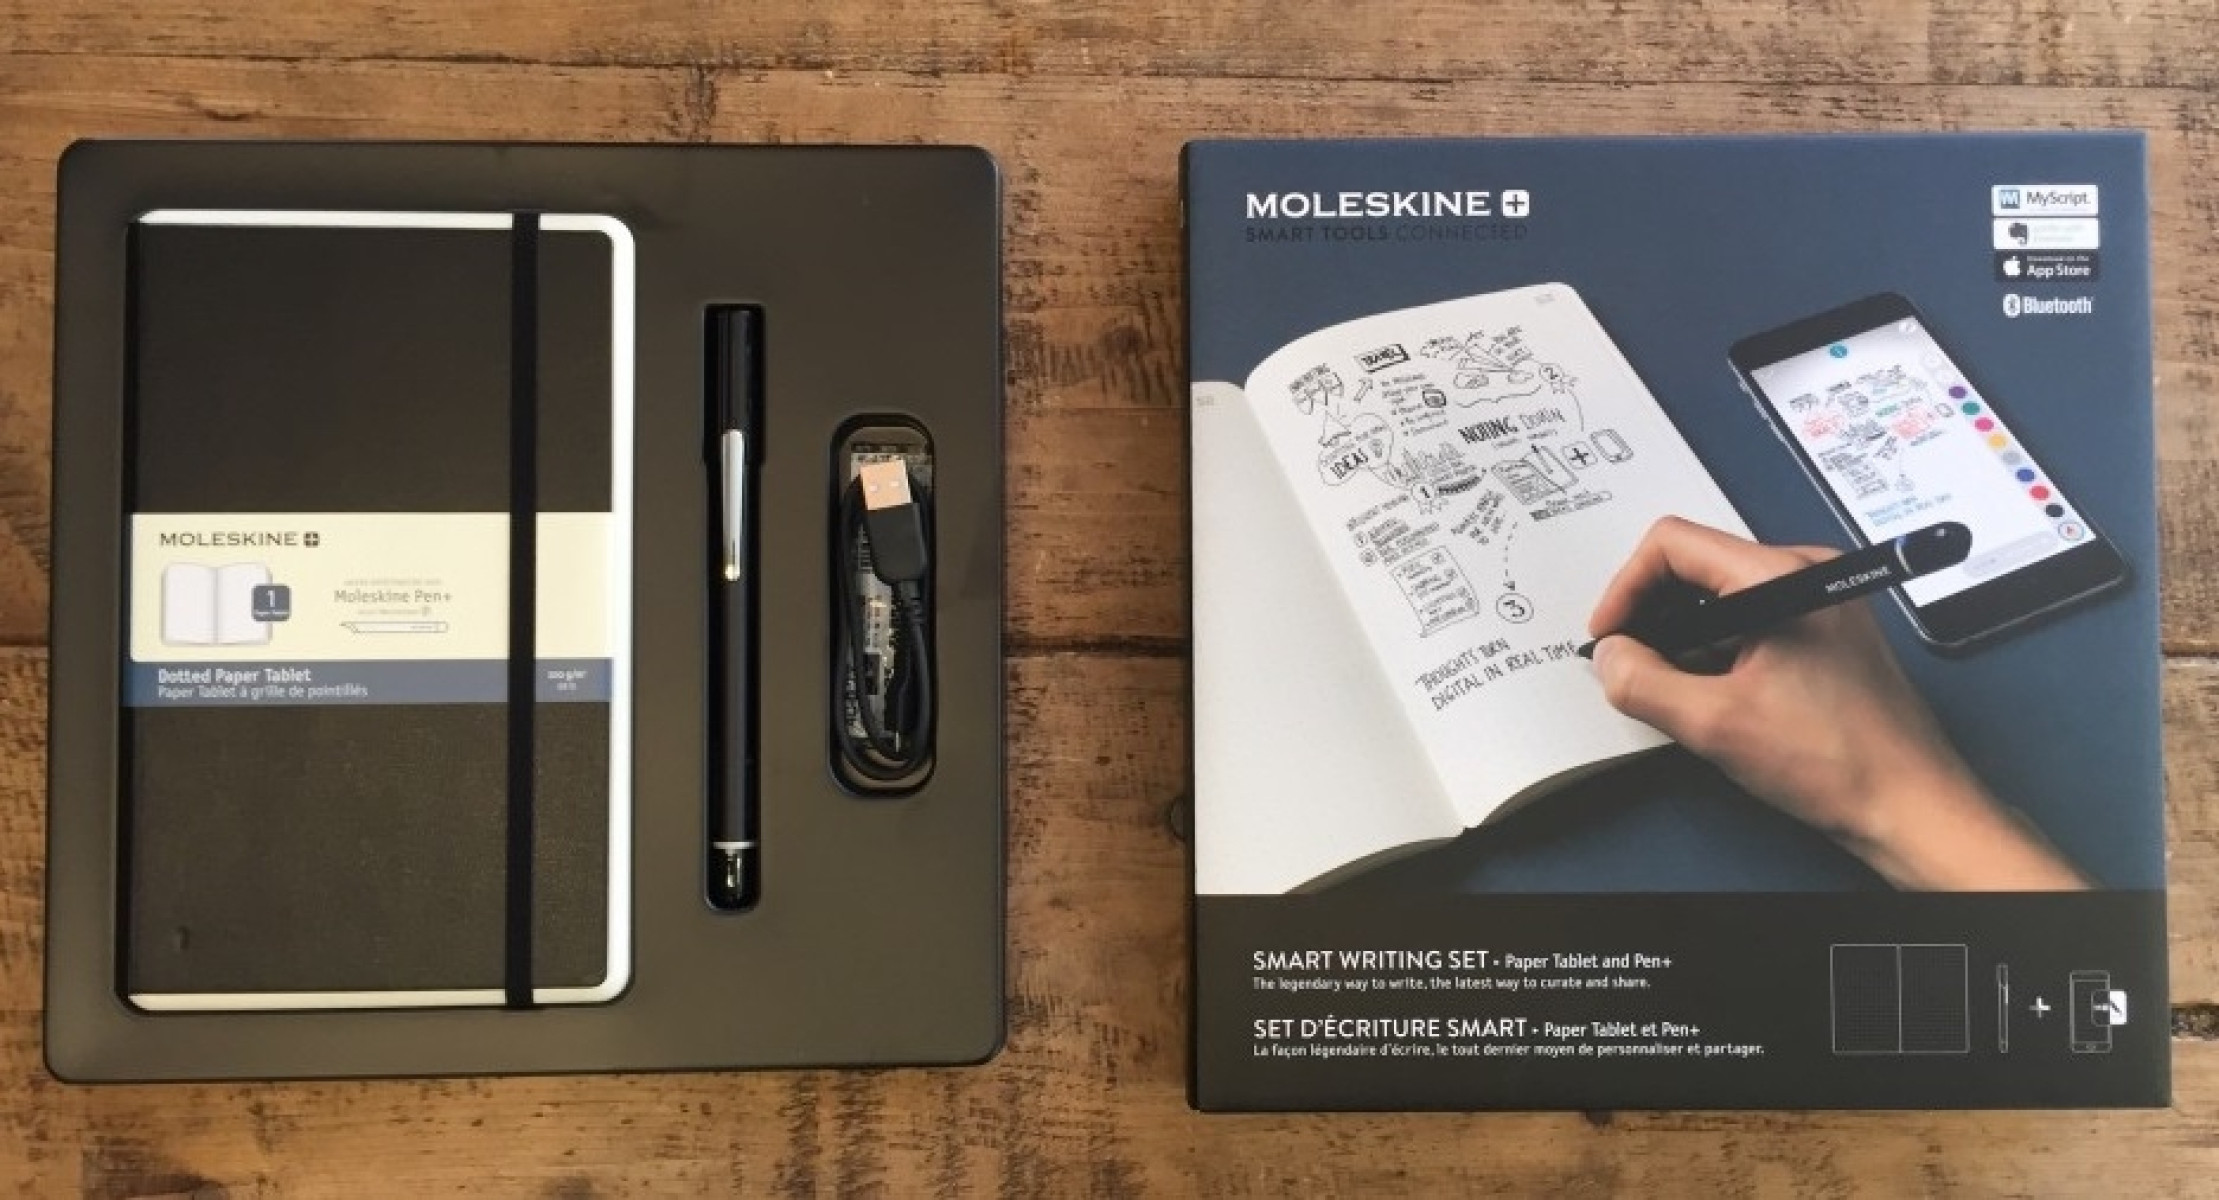 Moleskine smart writing set